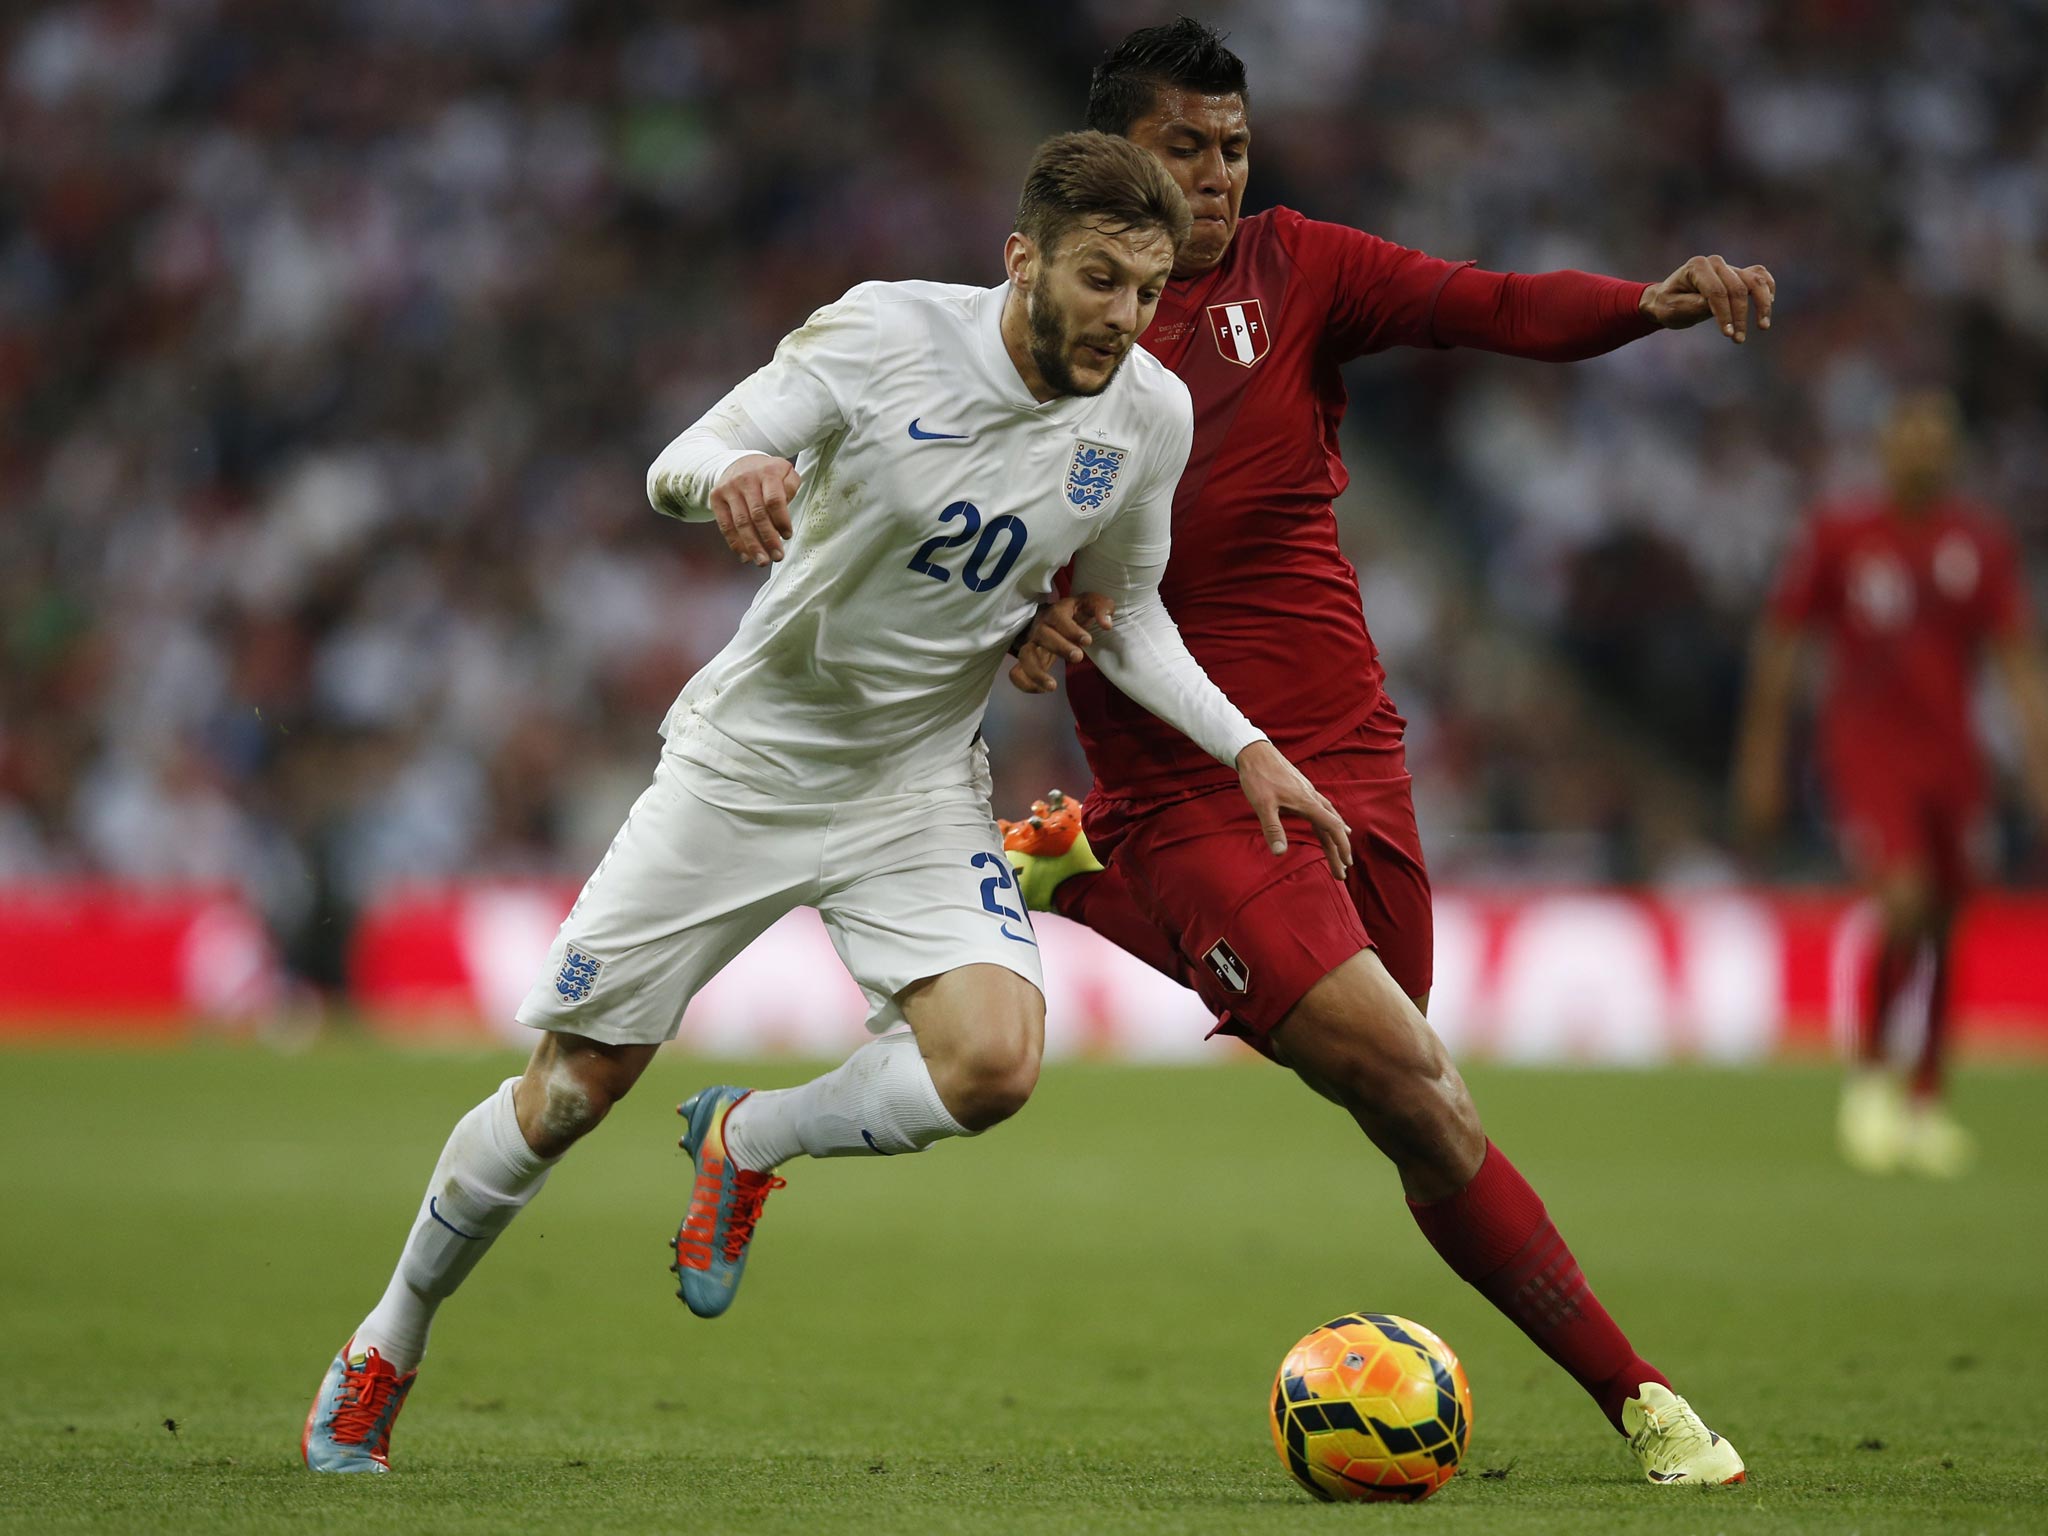 England's midfielder Adam Lallana (L) bursts into the box tracked by Peru's midfielder Rinaldo Cruzado